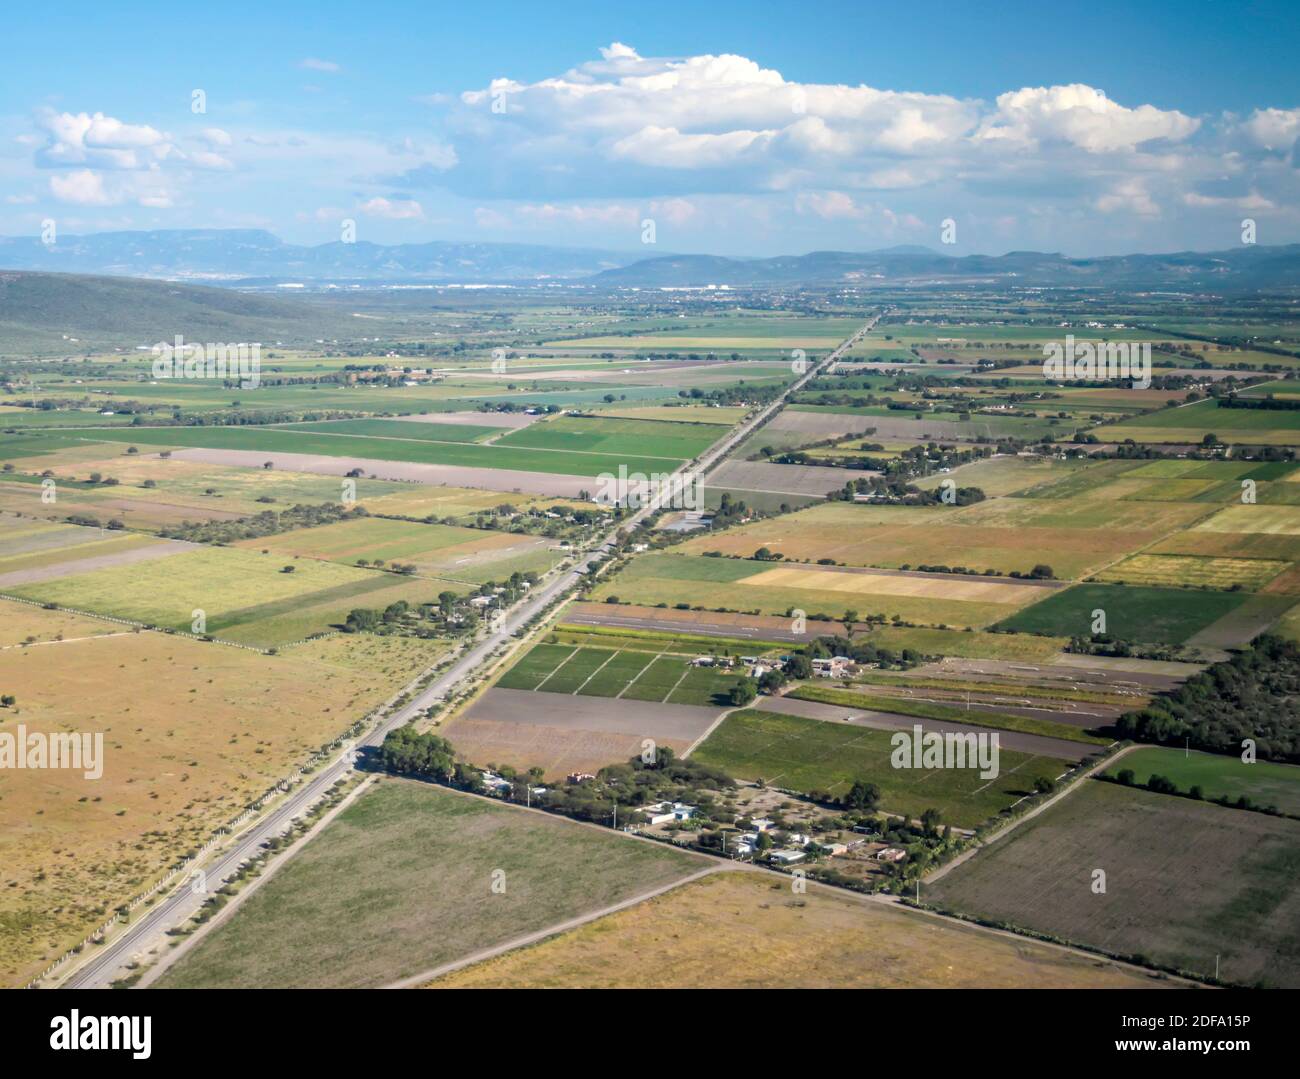 Railway line cuts through central Mexico landscape Stock Photo